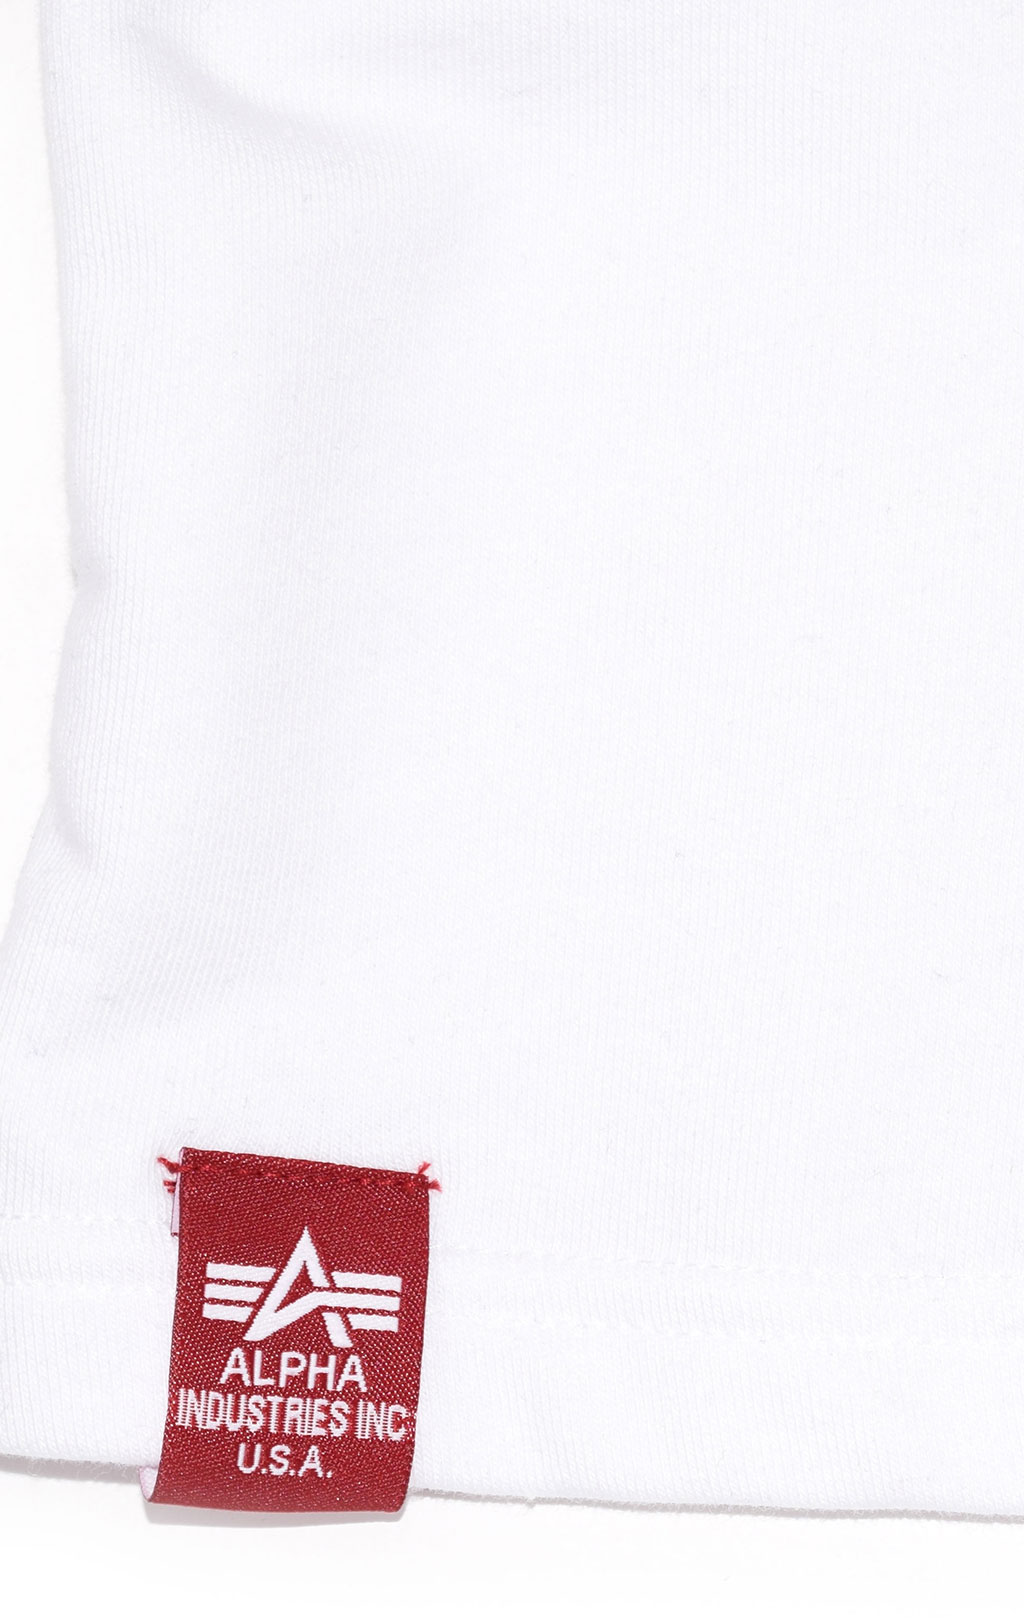 Женская футболка-кроп ALPHA INDUSTRIES BASIC BOXY T white 